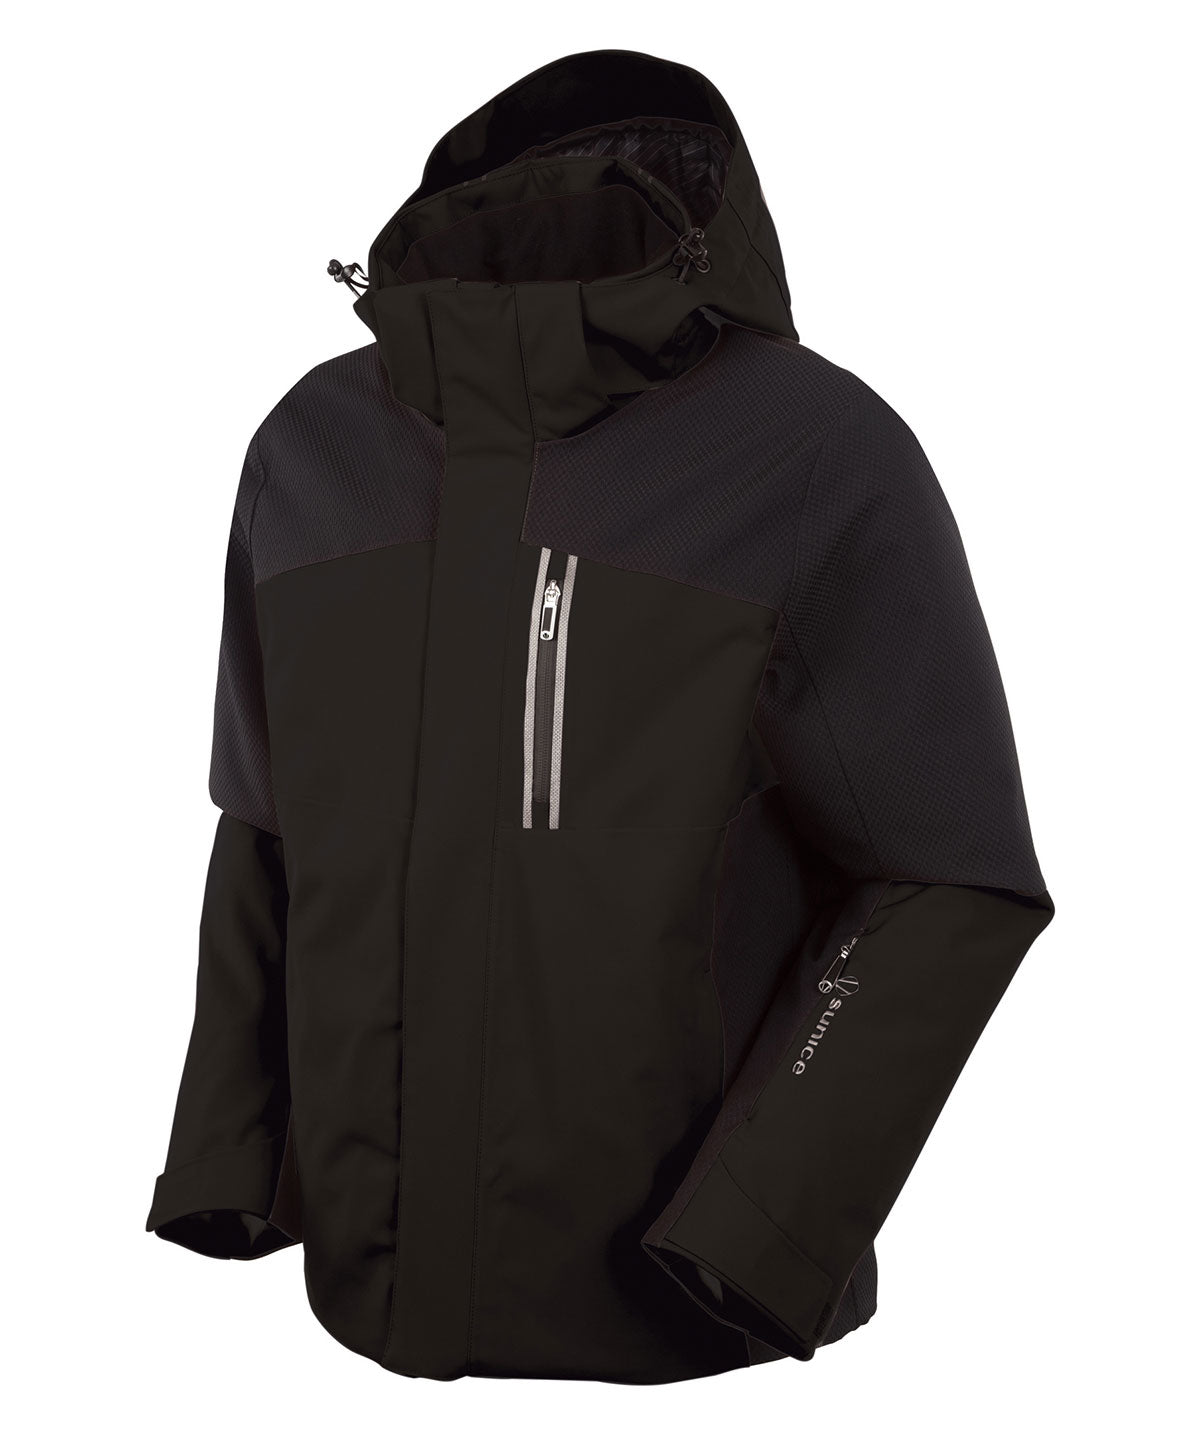  SUOKENI Men's Waterproof Ski Jacket Warm Winter Snow Coat  Hooded Raincoat Small : Clothing, Shoes & Jewelry